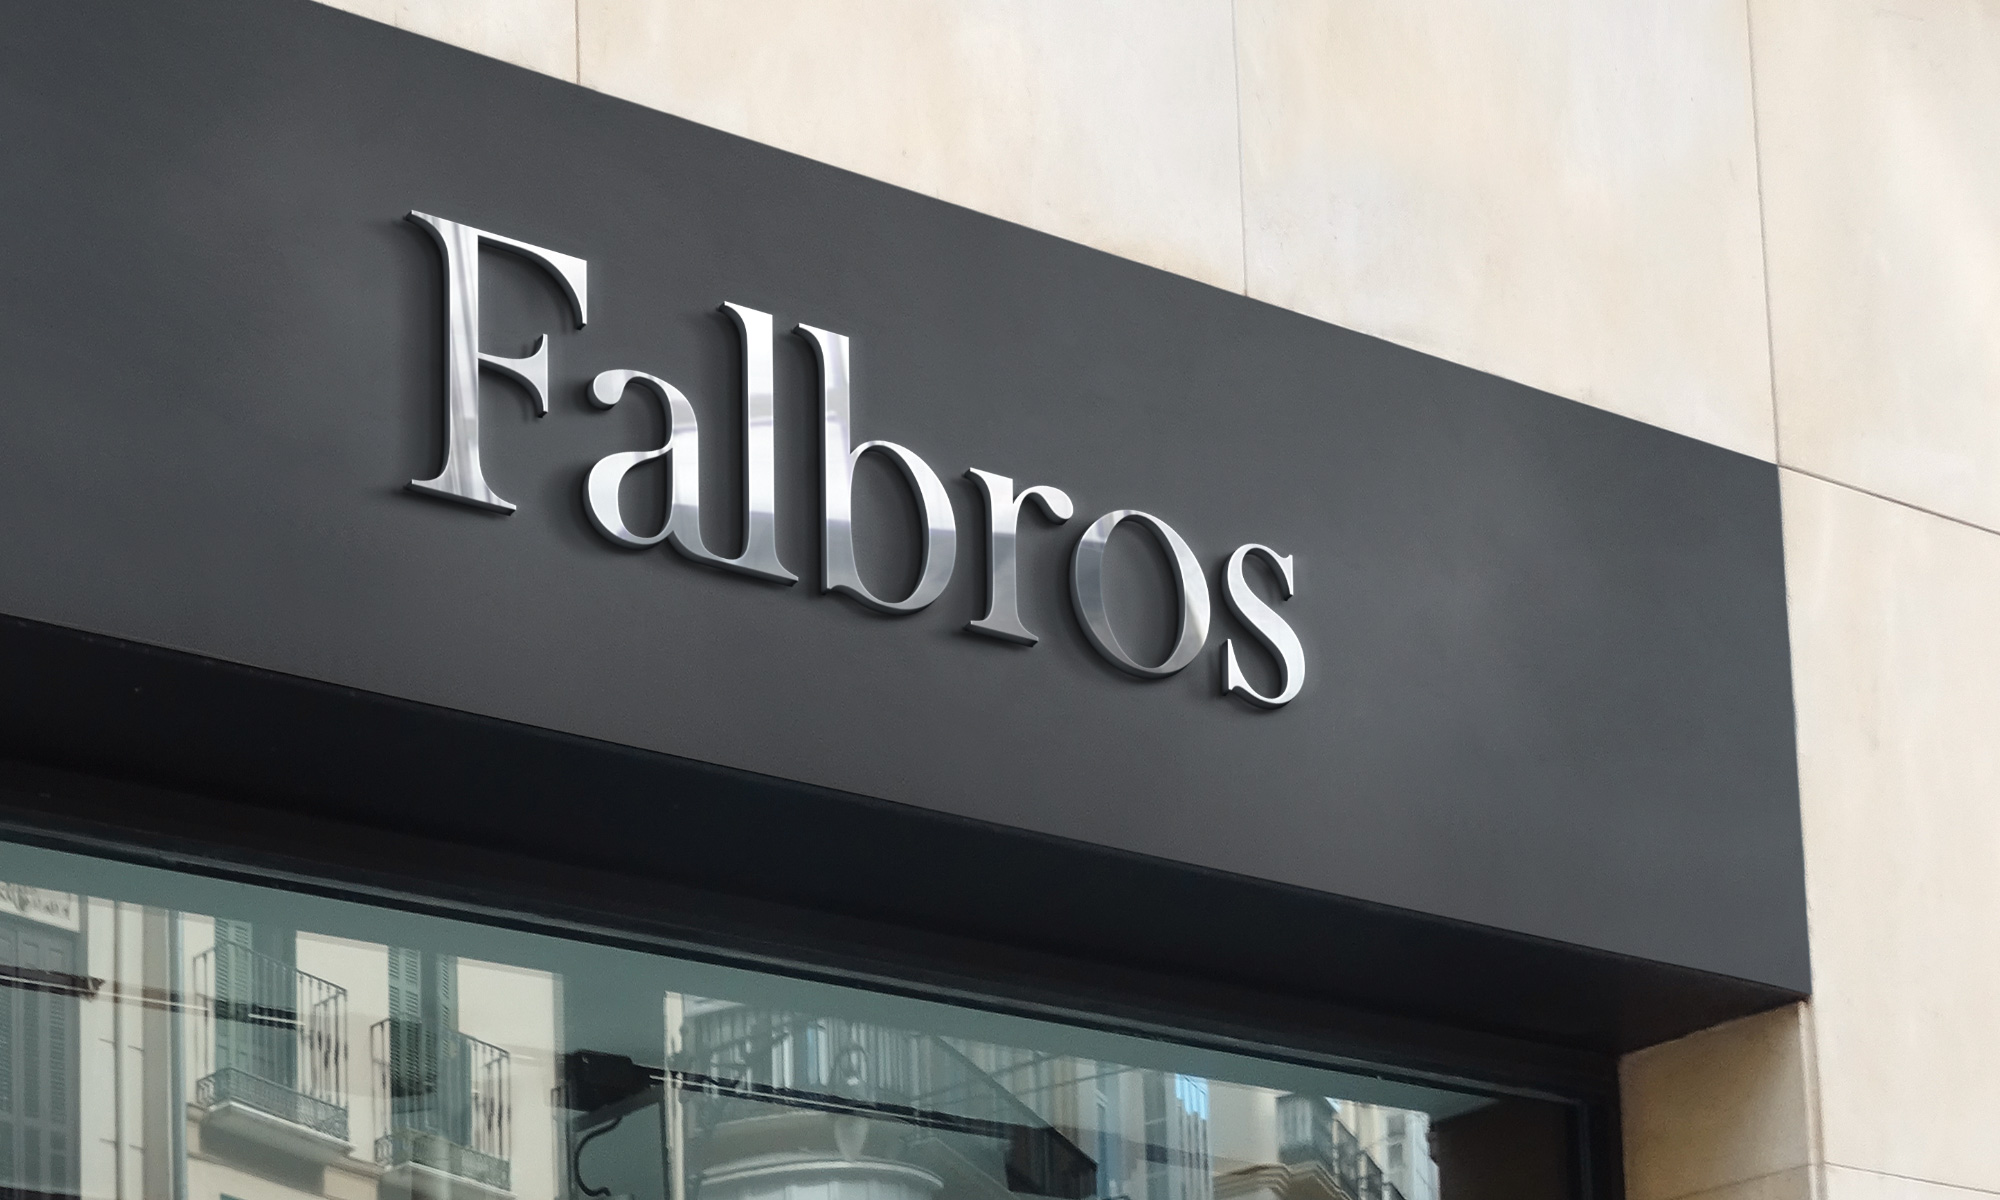 Falbros logo signage